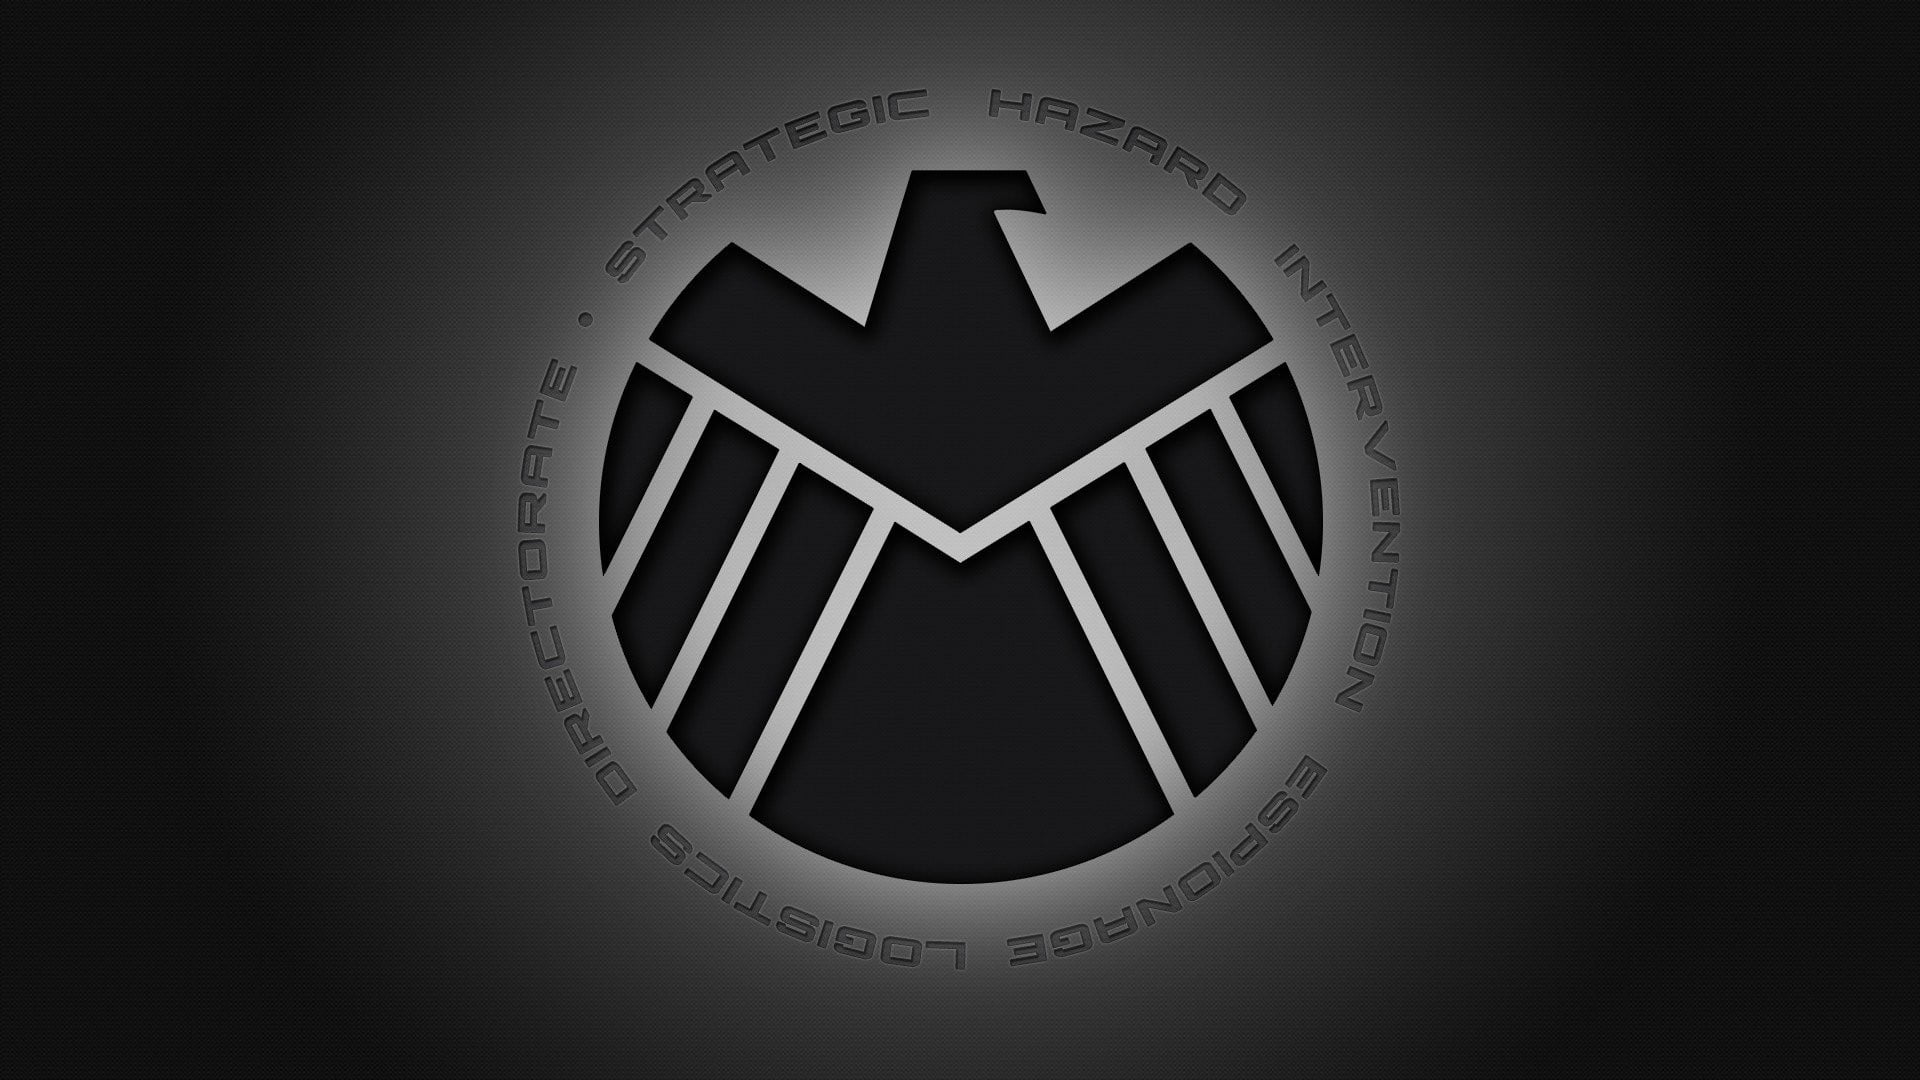 black bird logo, Agents of S.H.I.E.L.D., The Avengers, symbol